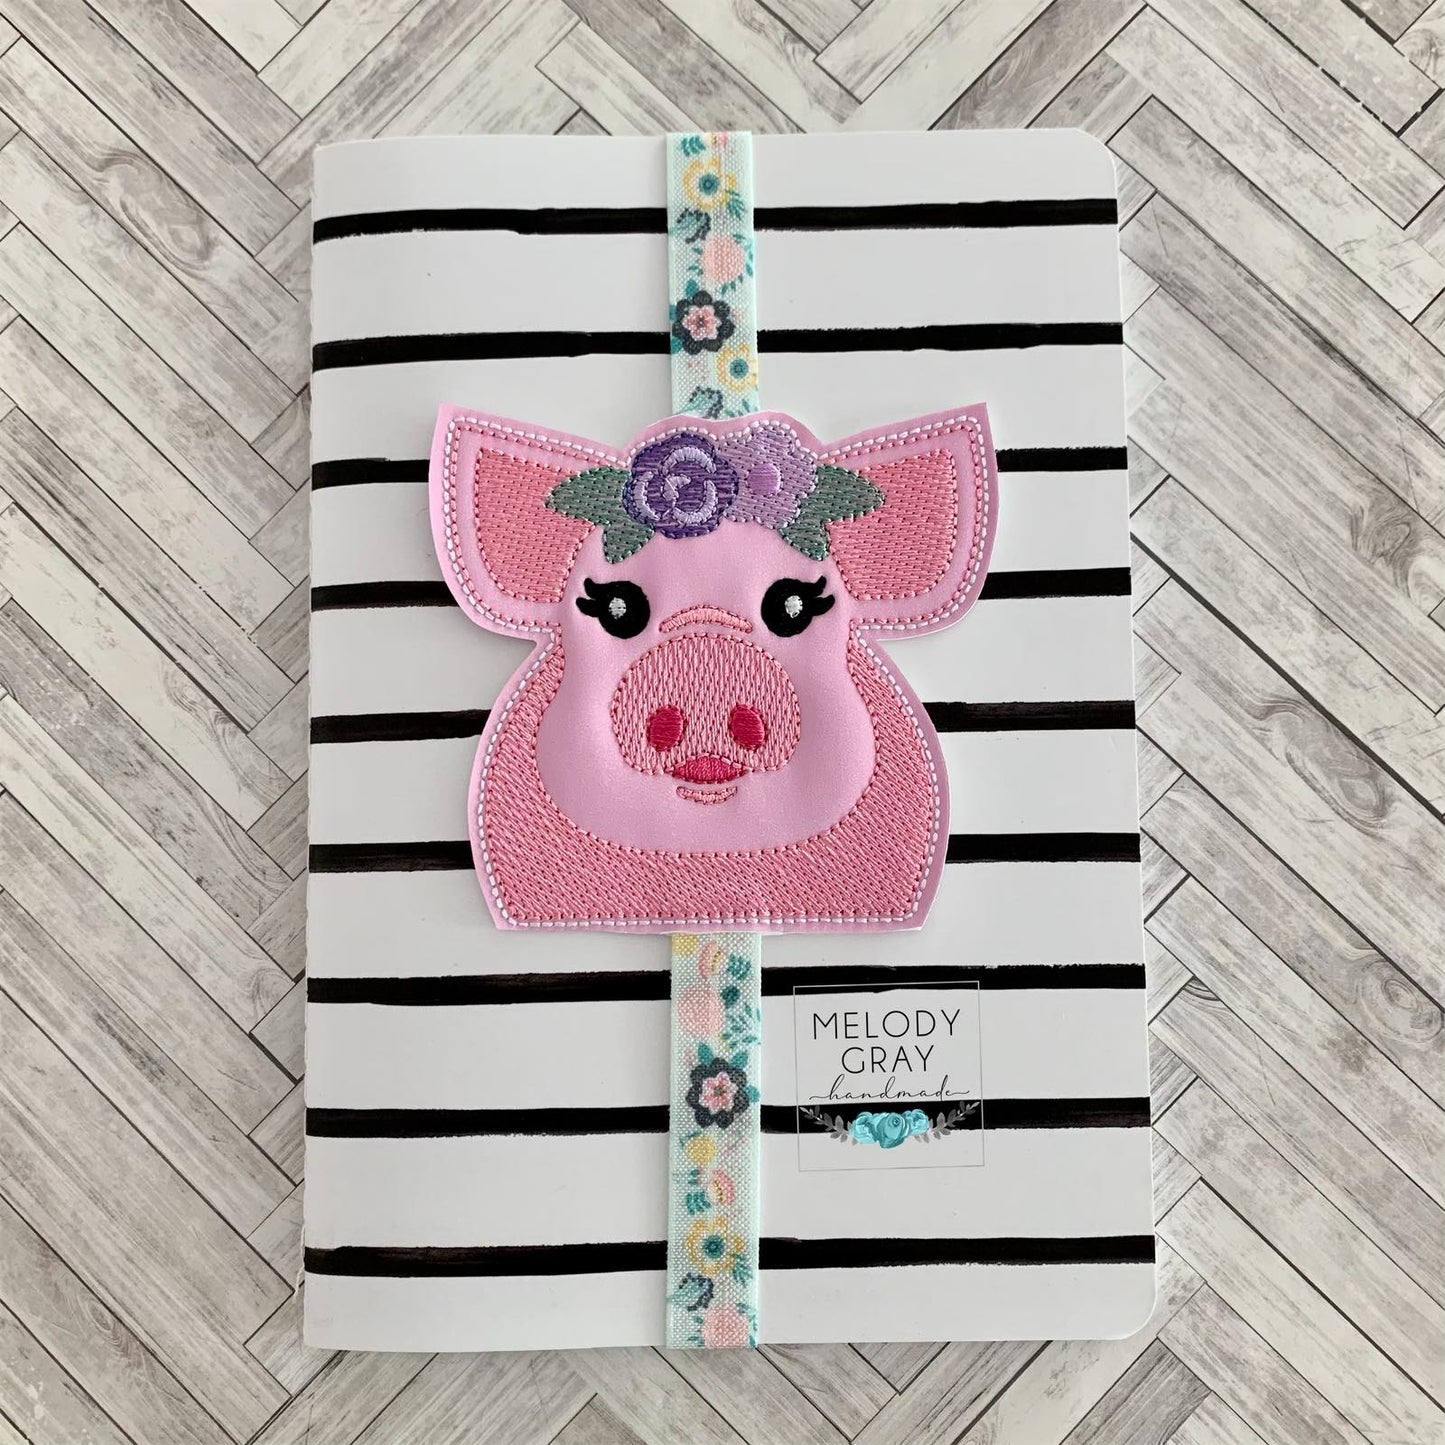 Floral Pig Book Band - Embroidery Design, Digital File